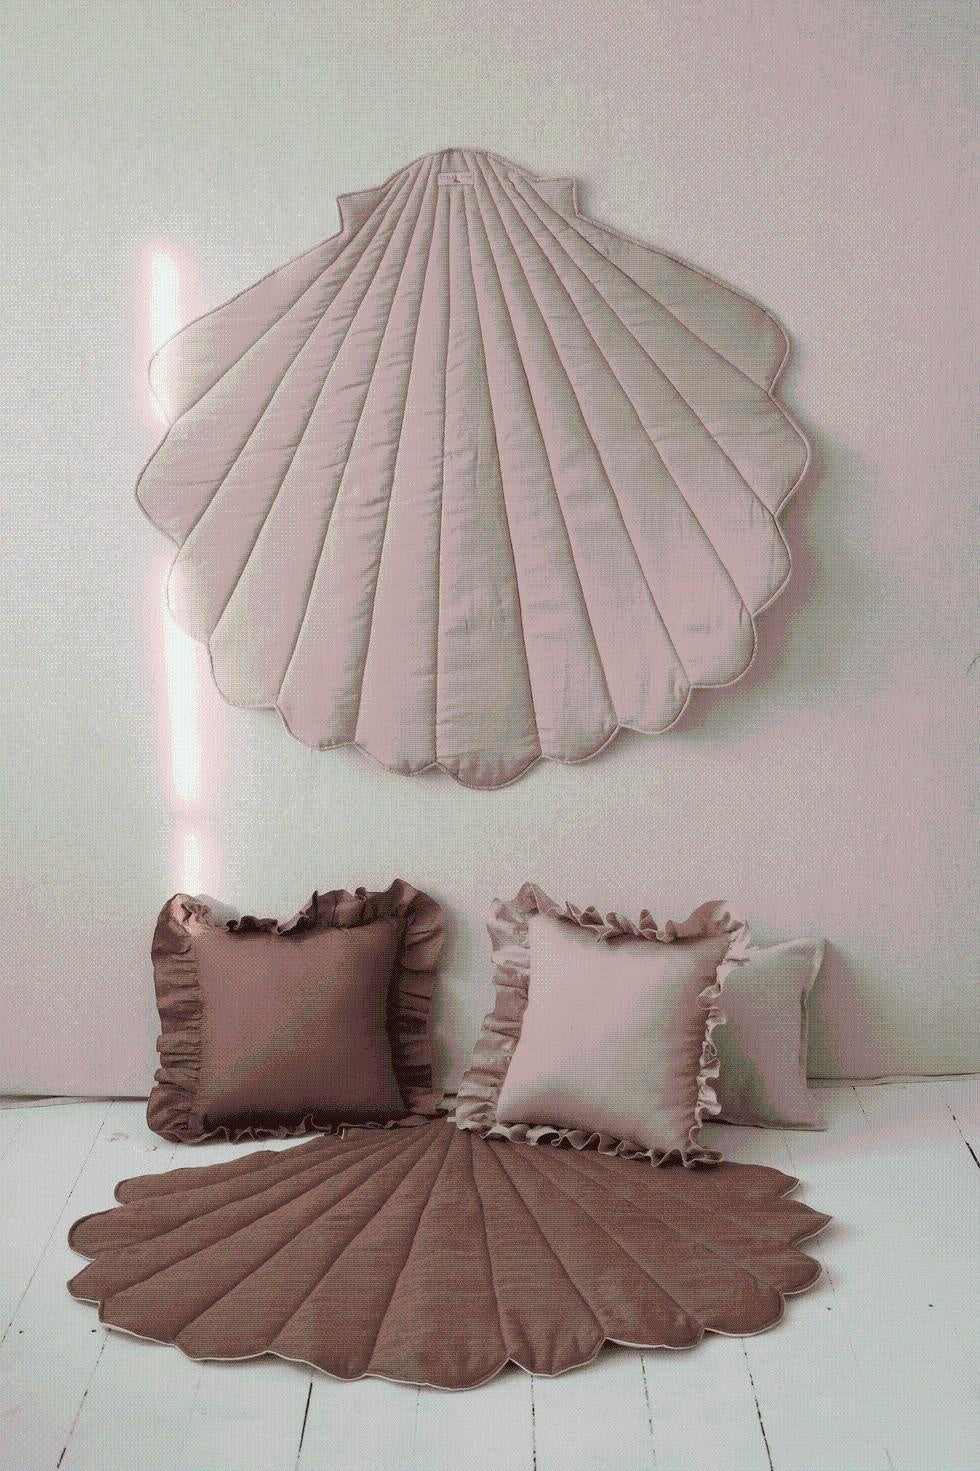 “Marsala” Linen Shell Mat